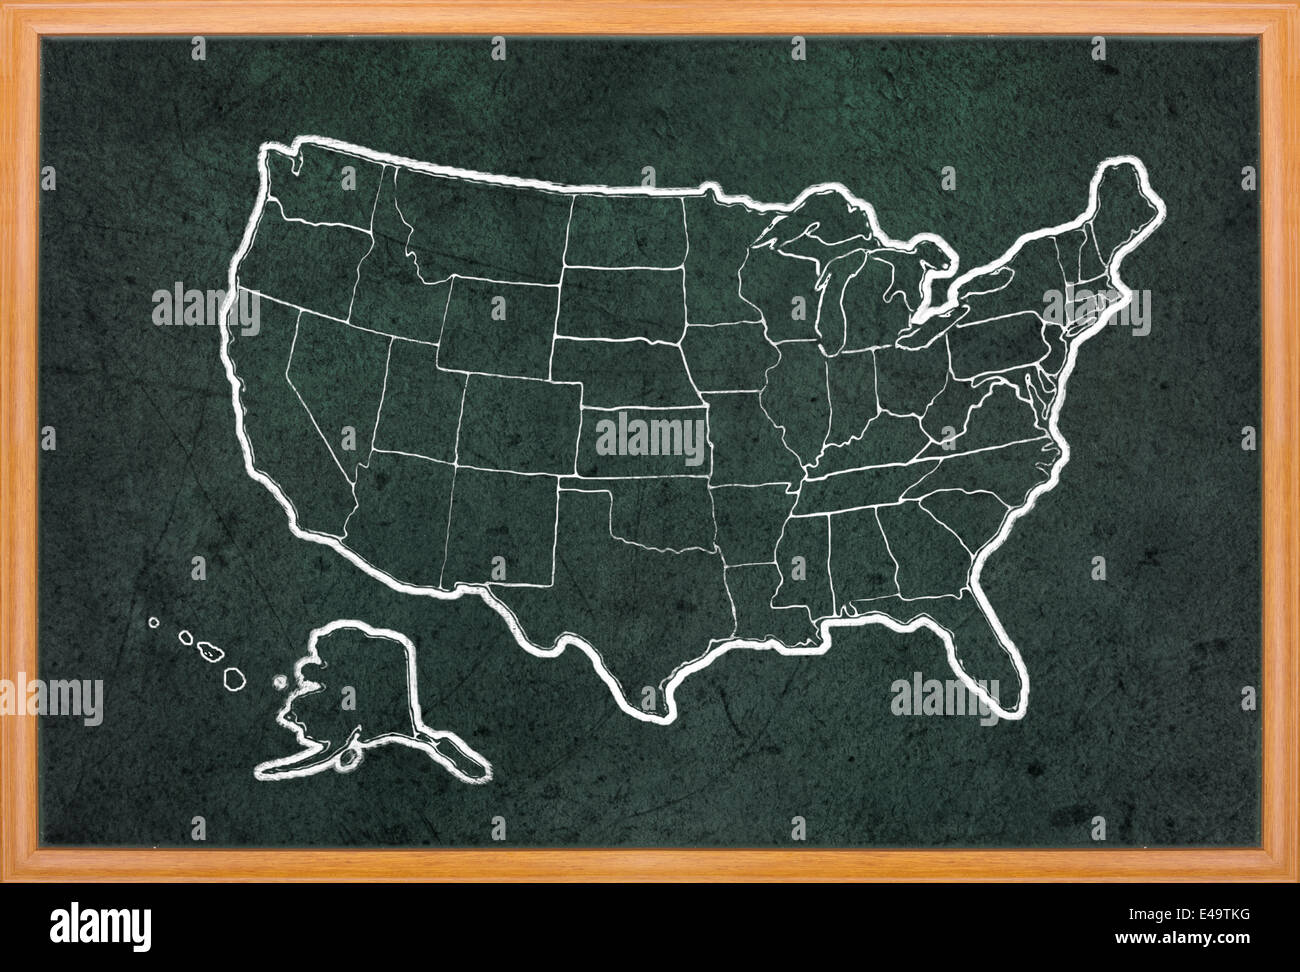 America map draw on grunge blackboard Stock Photo